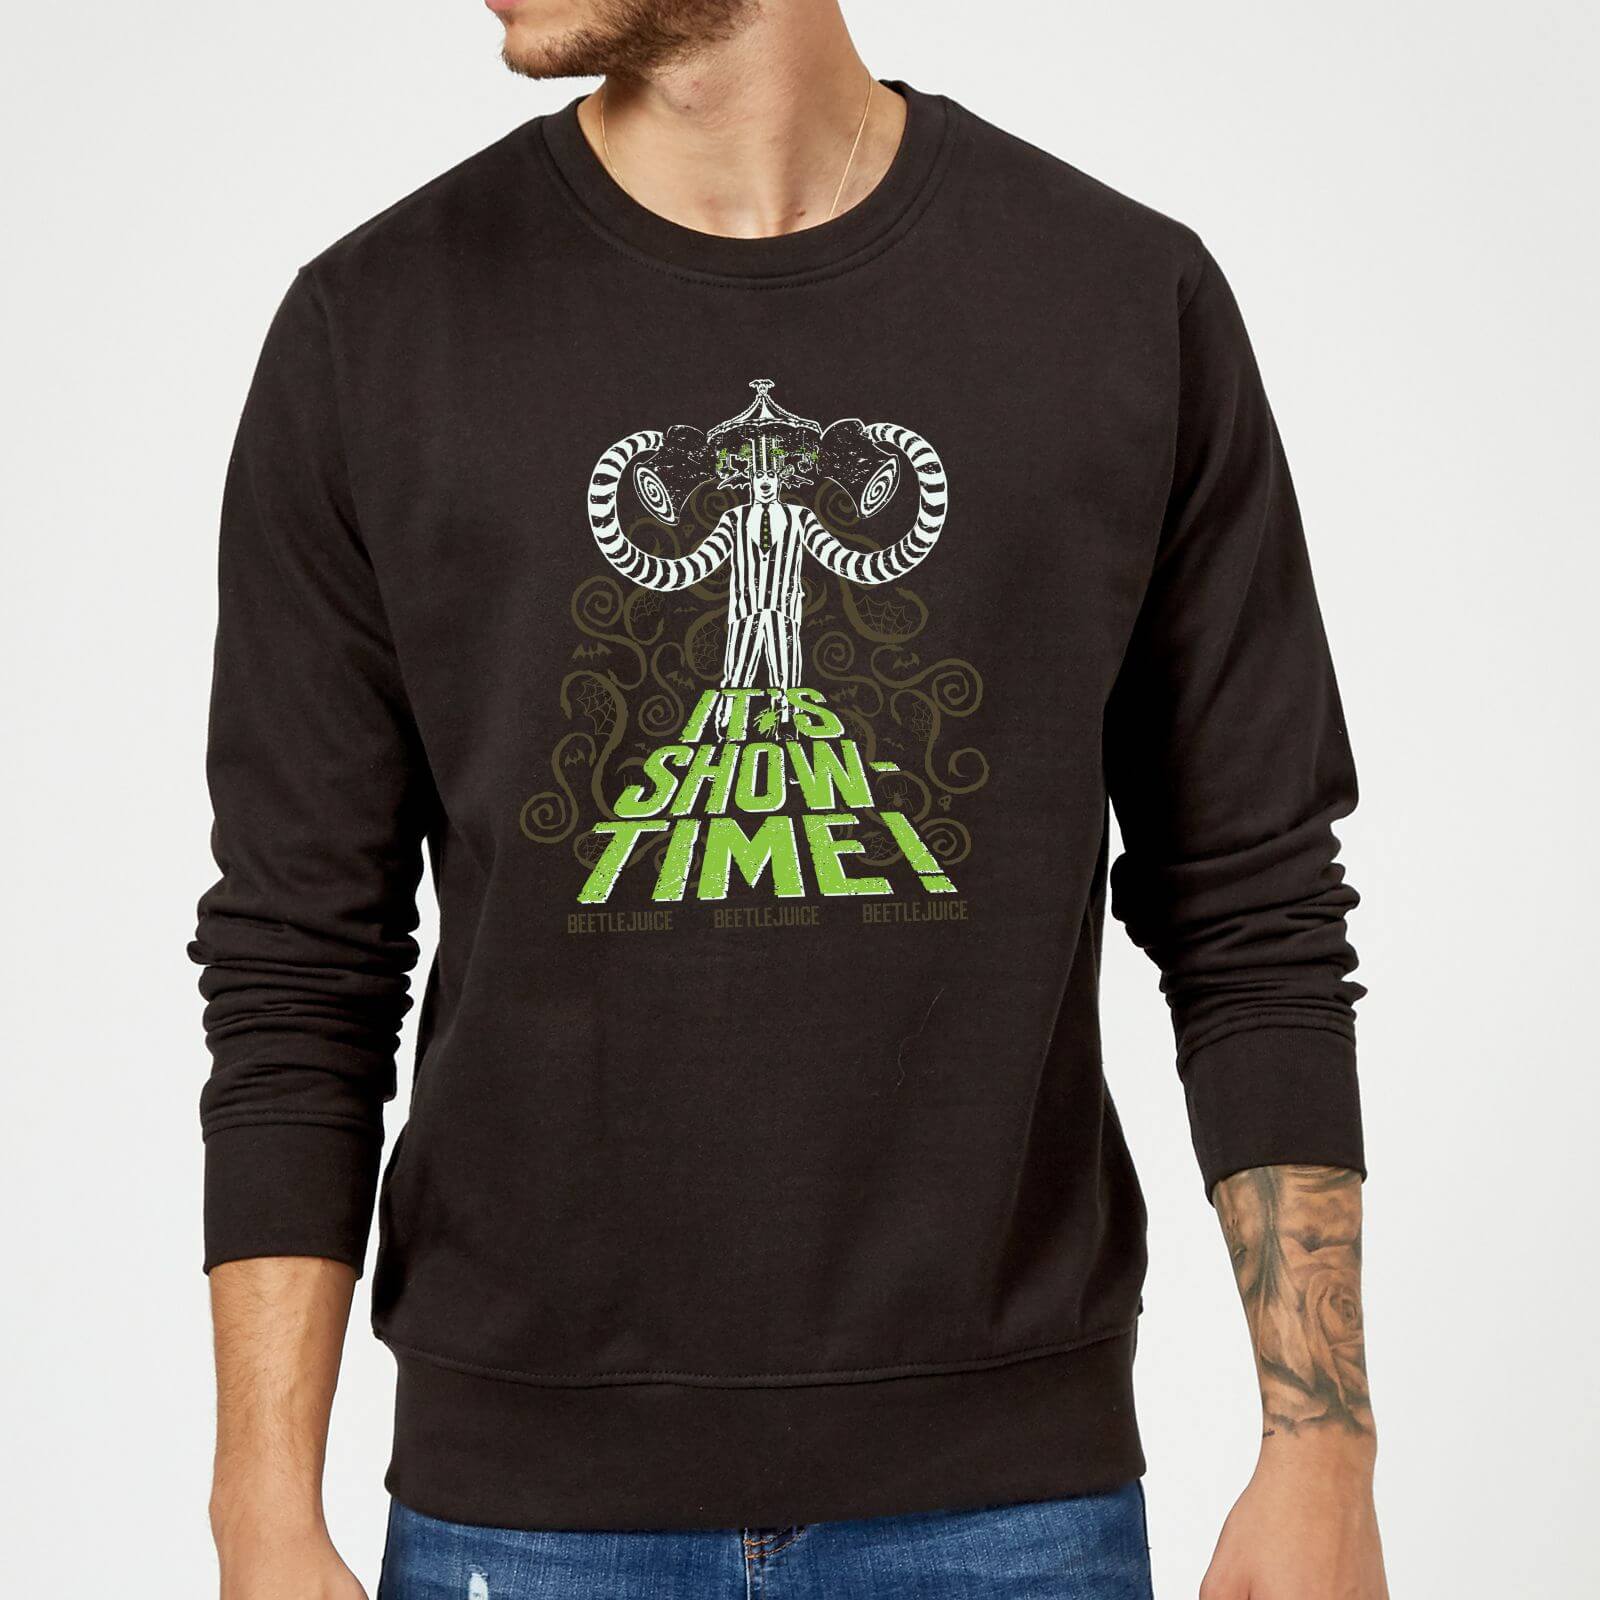 Beetlejuice It's Show-Time Sweatshirt - Black - 5XL - Black